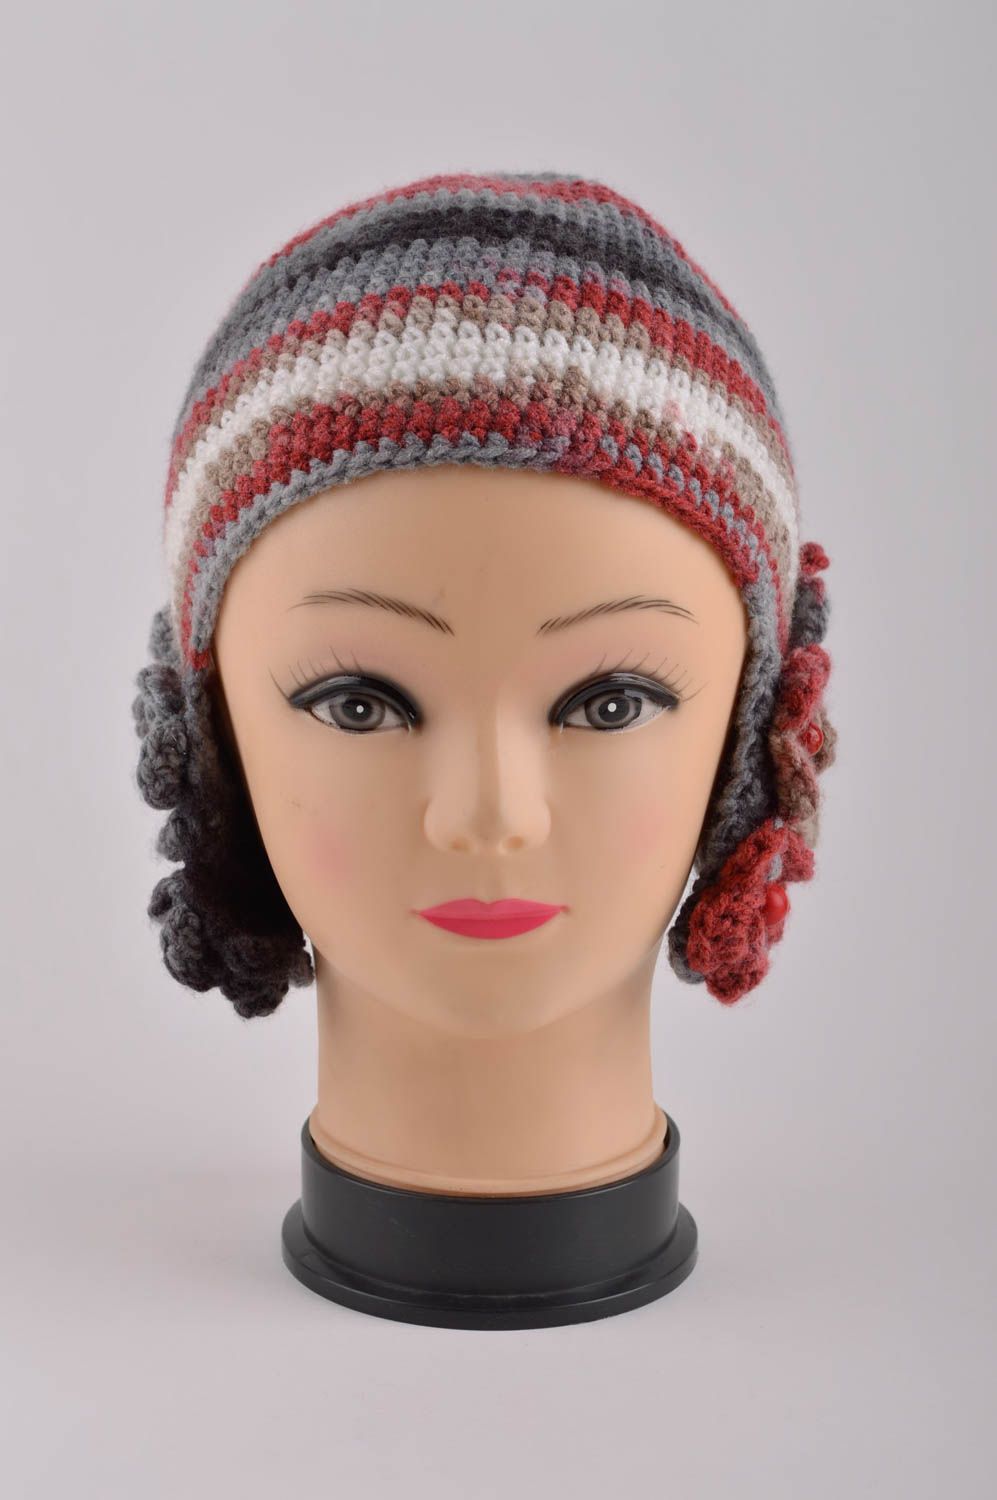 Handmade winter hat crochet hat ladies winter hats designer accessories photo 3